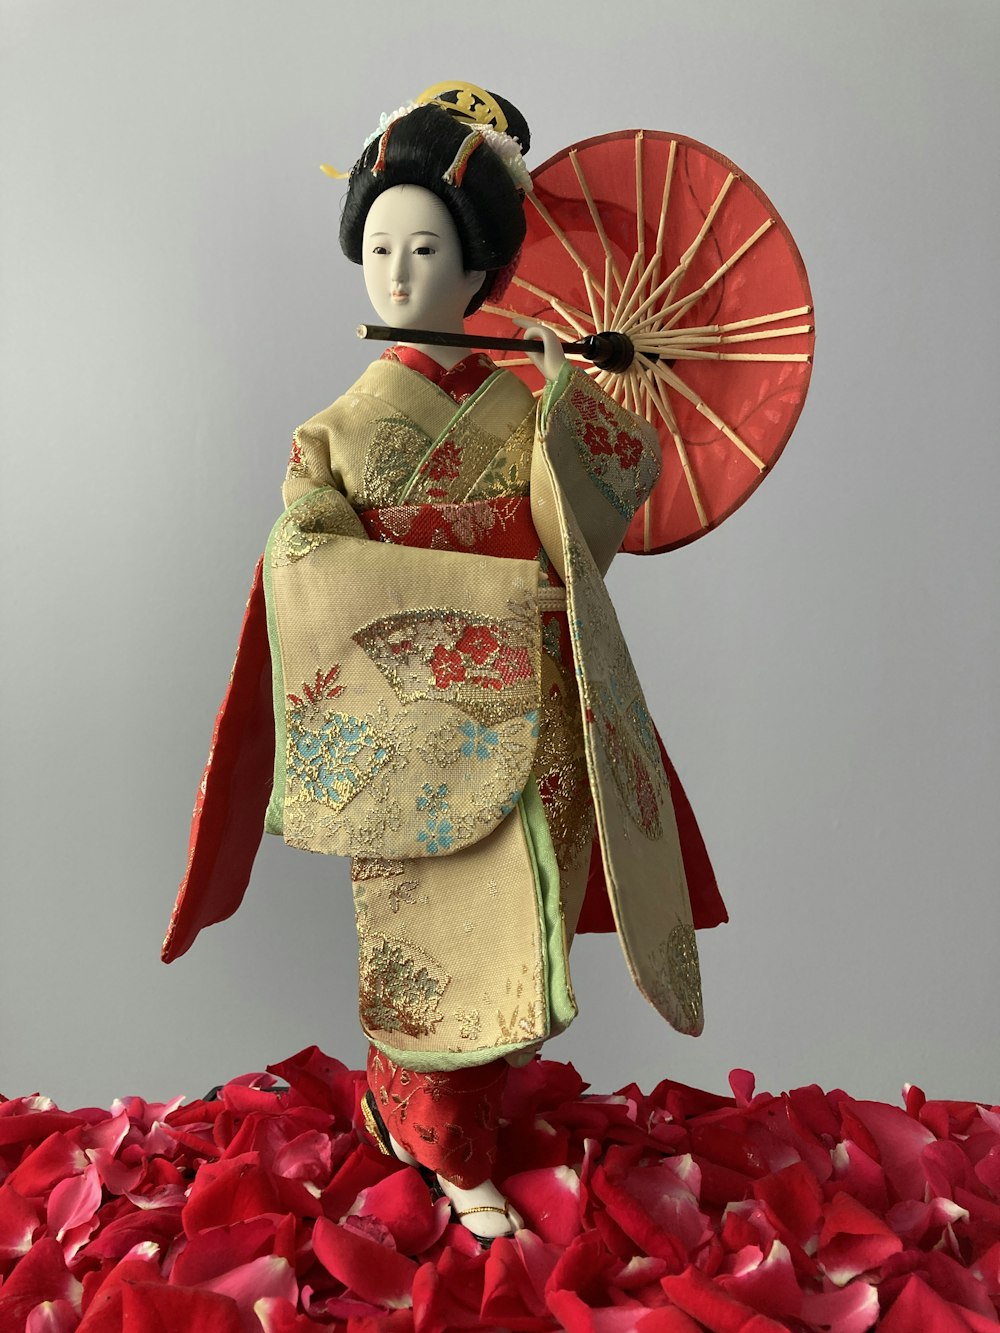 a geisha doll holding a parasol on a bed of petals